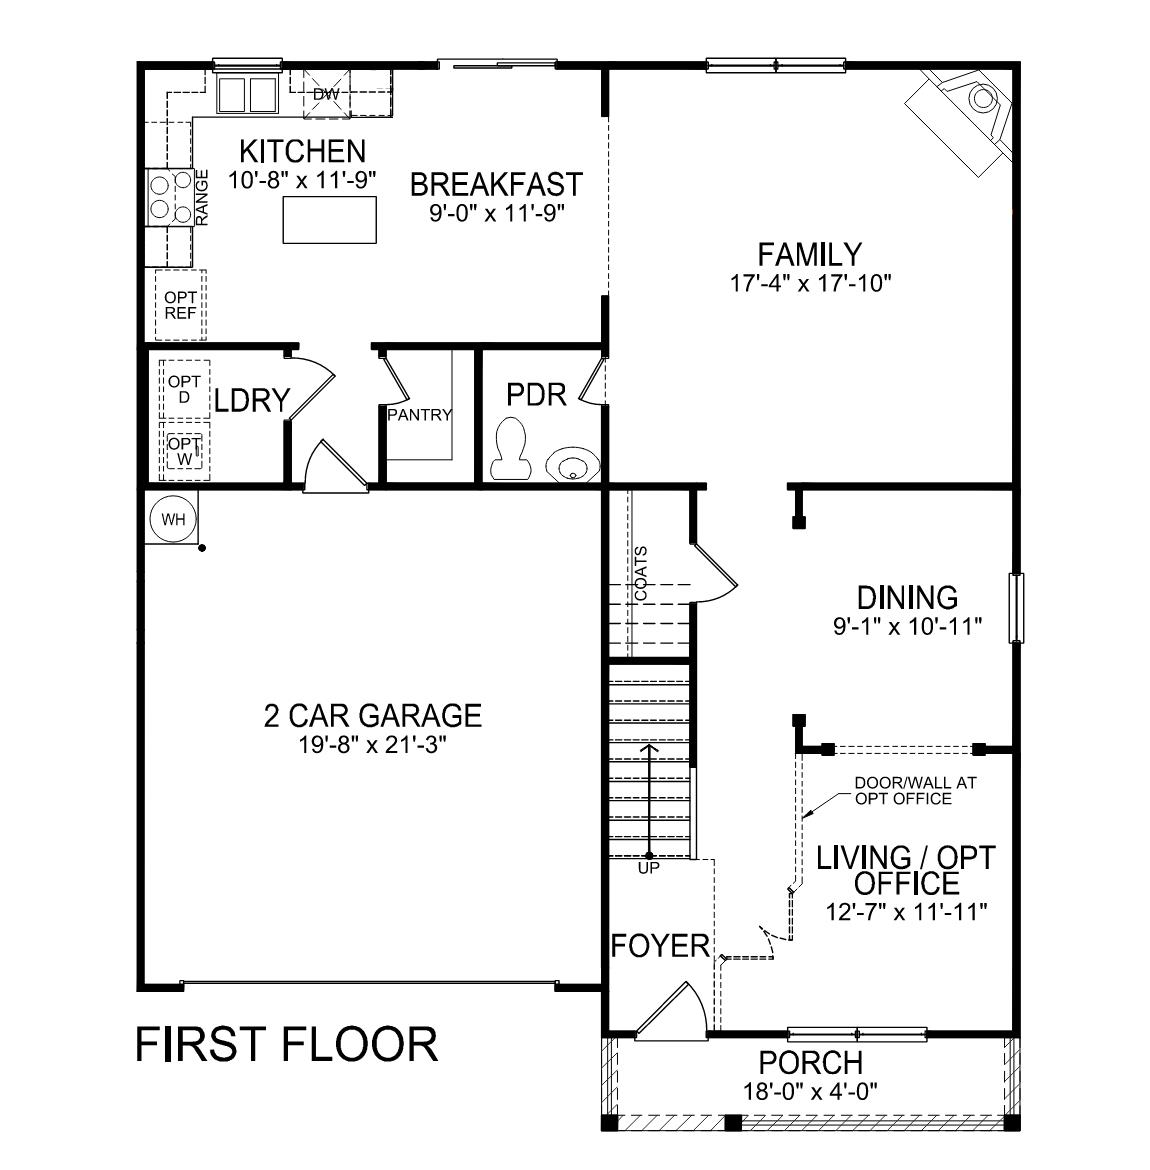 Biltmore first floor plan